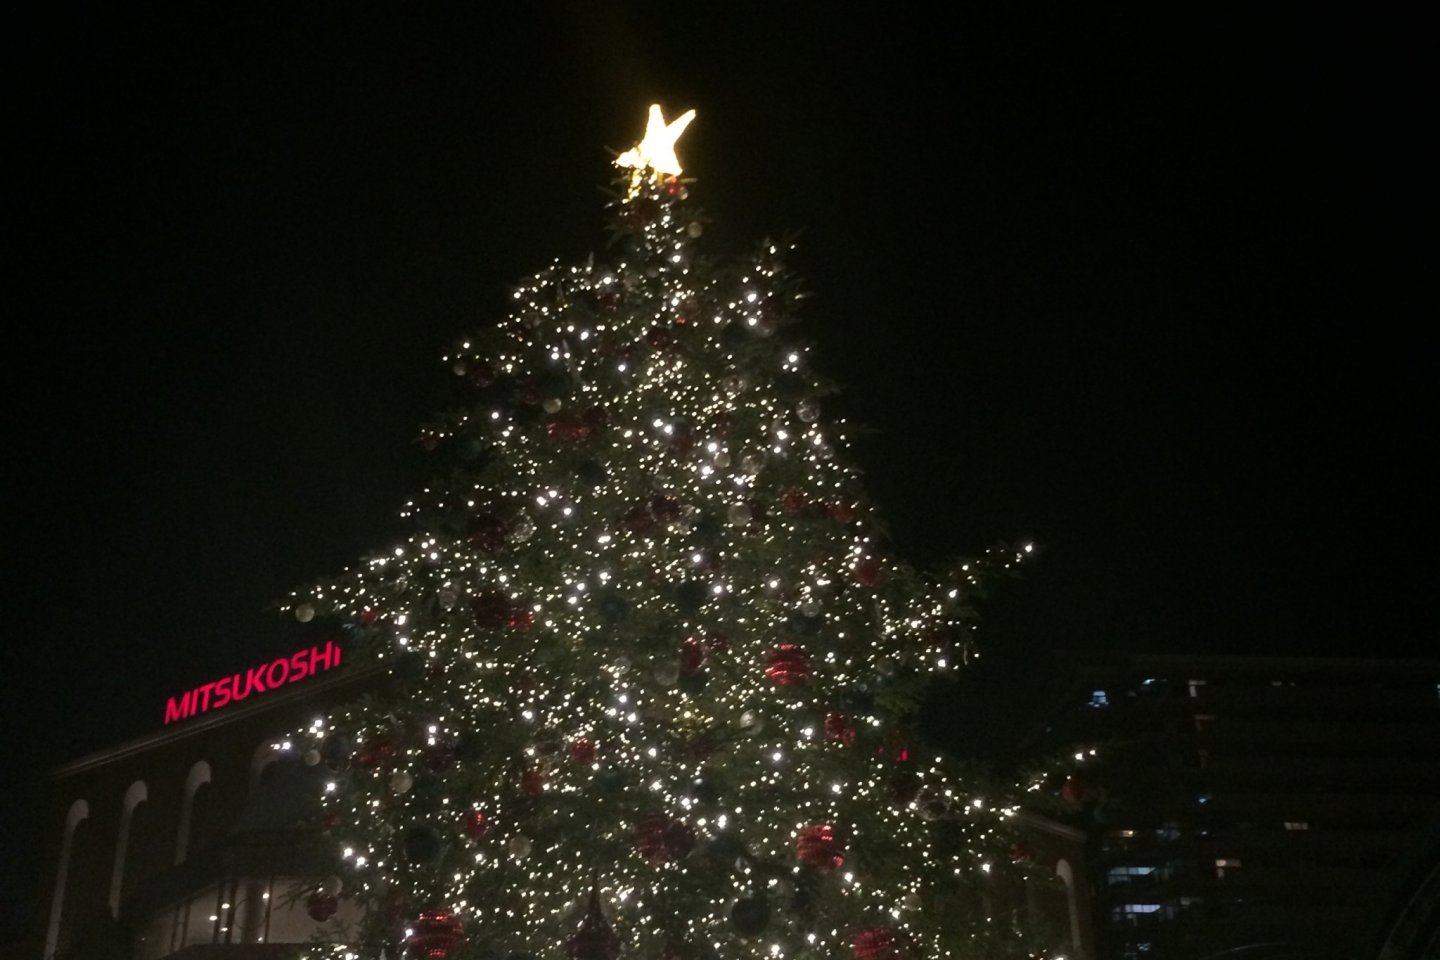 Giant Christmas tree.